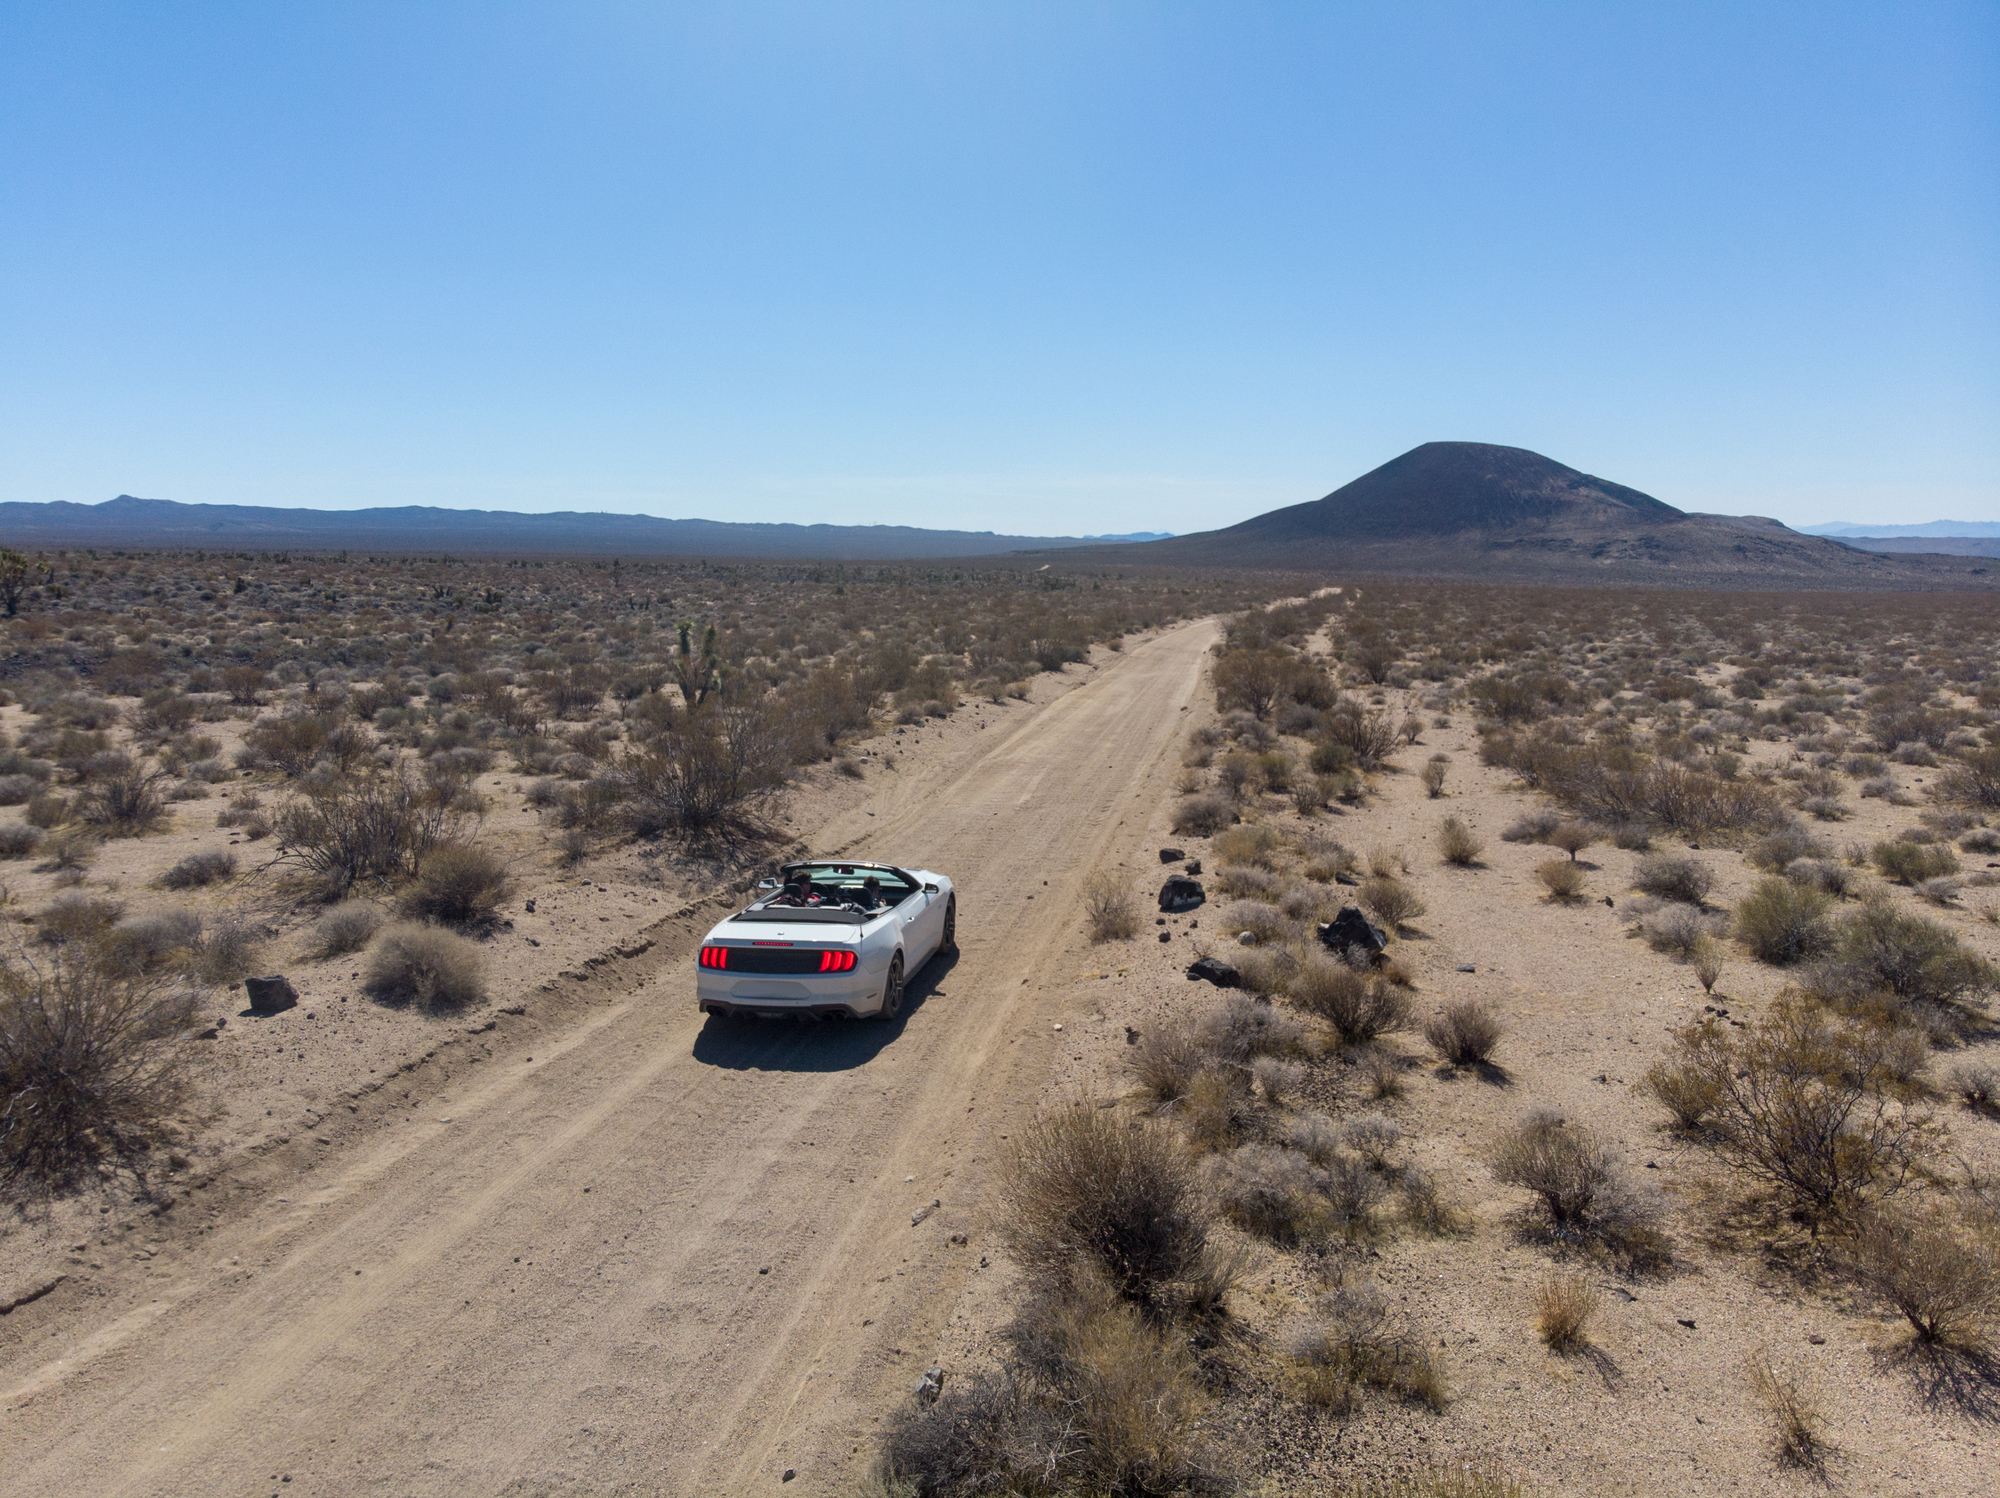 An overhead view of a car on a desert highway.